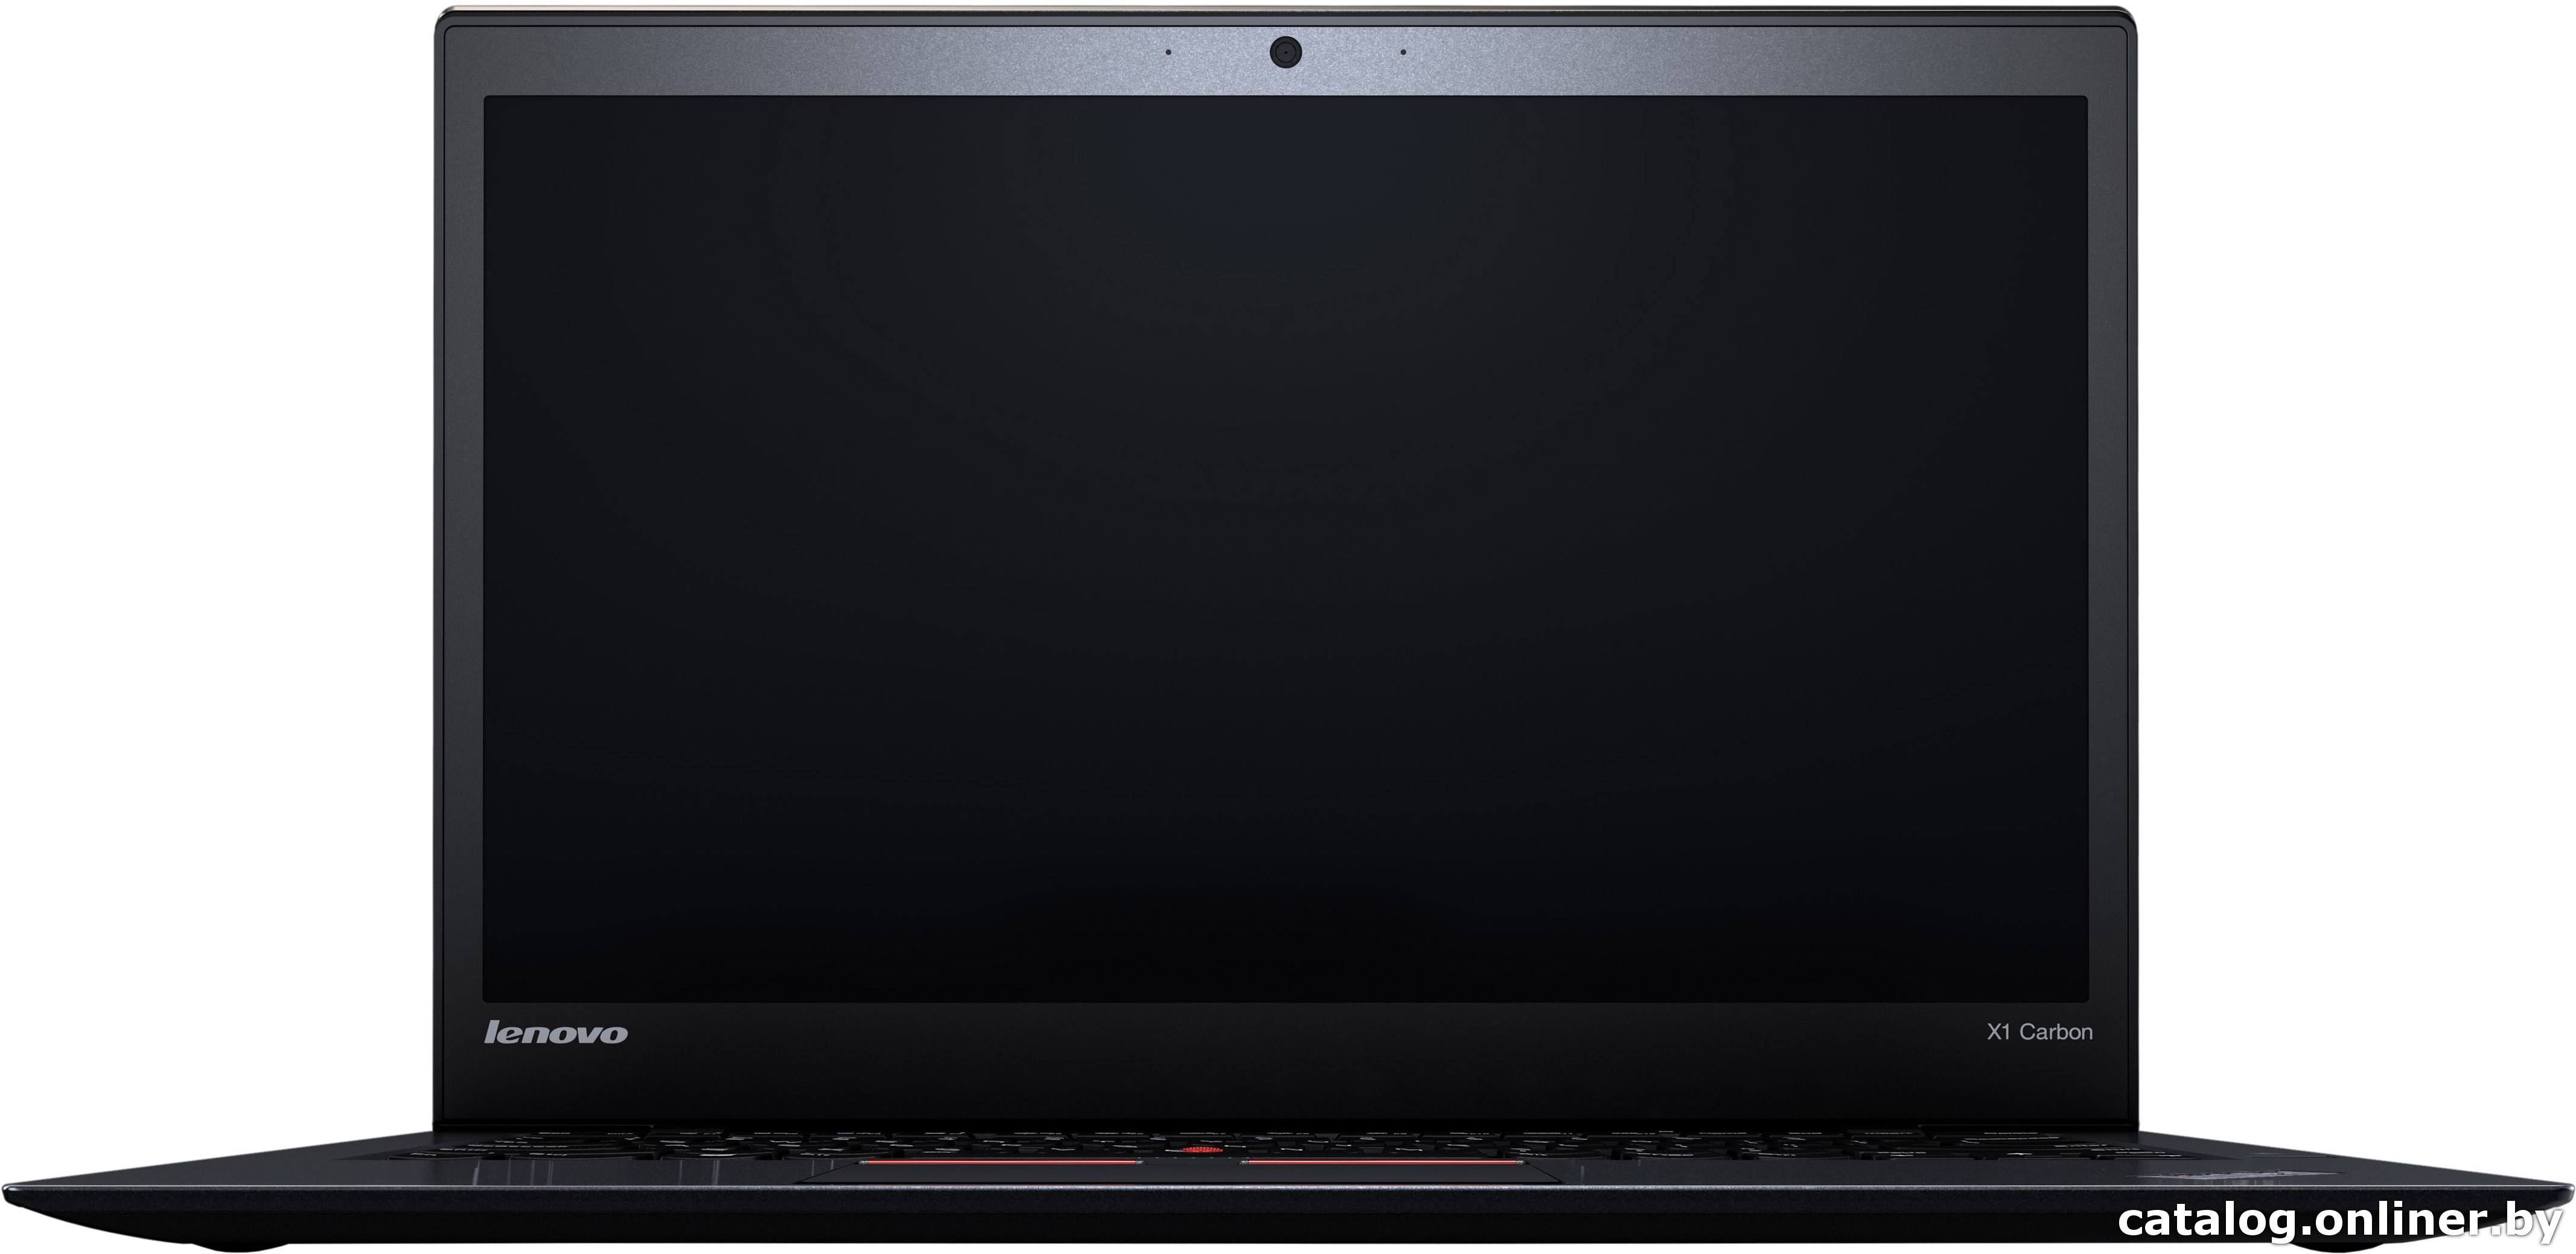 Замена оперативной памяти Lenovo ThinkPad X1 Carbon 3